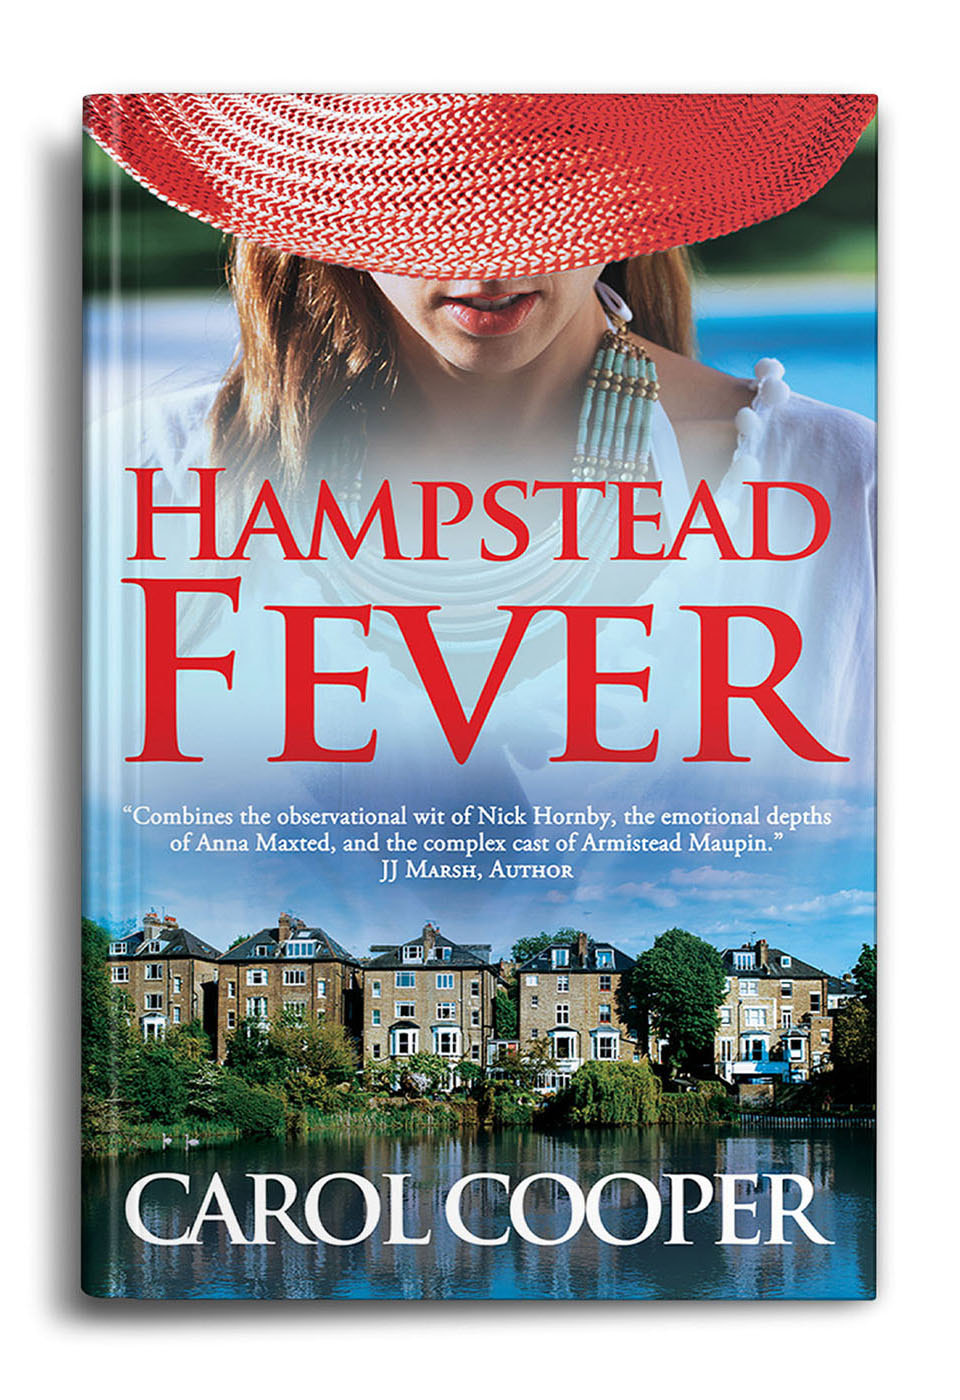 Hampstead-Fever-Carol-Cooper